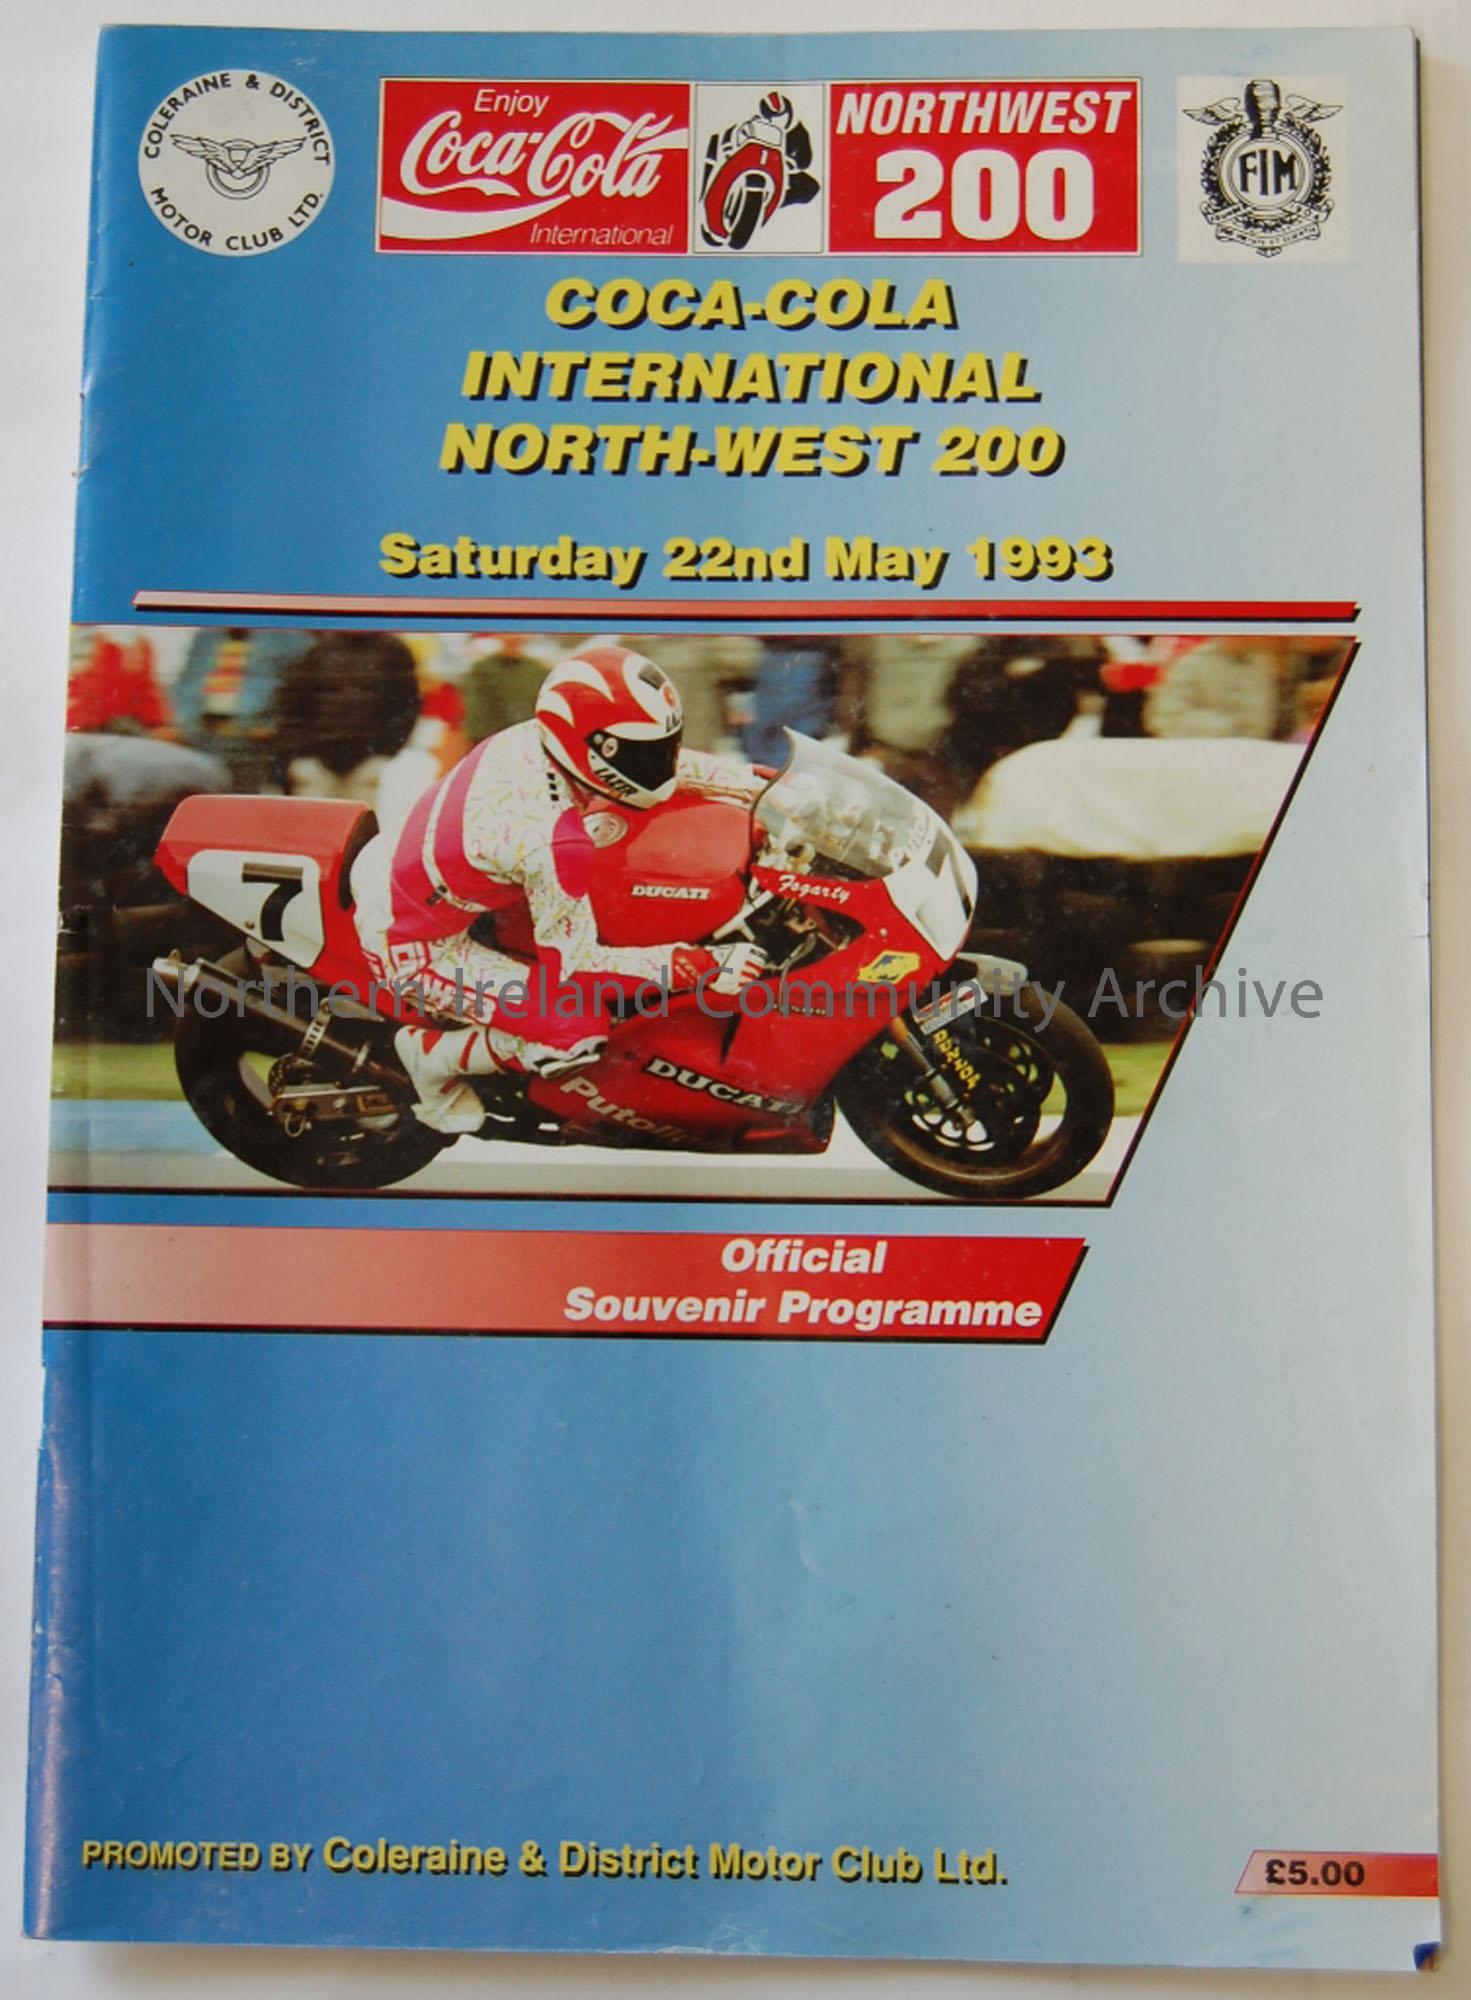 Souvenir programme- Coca-Cola International North-West 200 Saturday 22nd May 1993